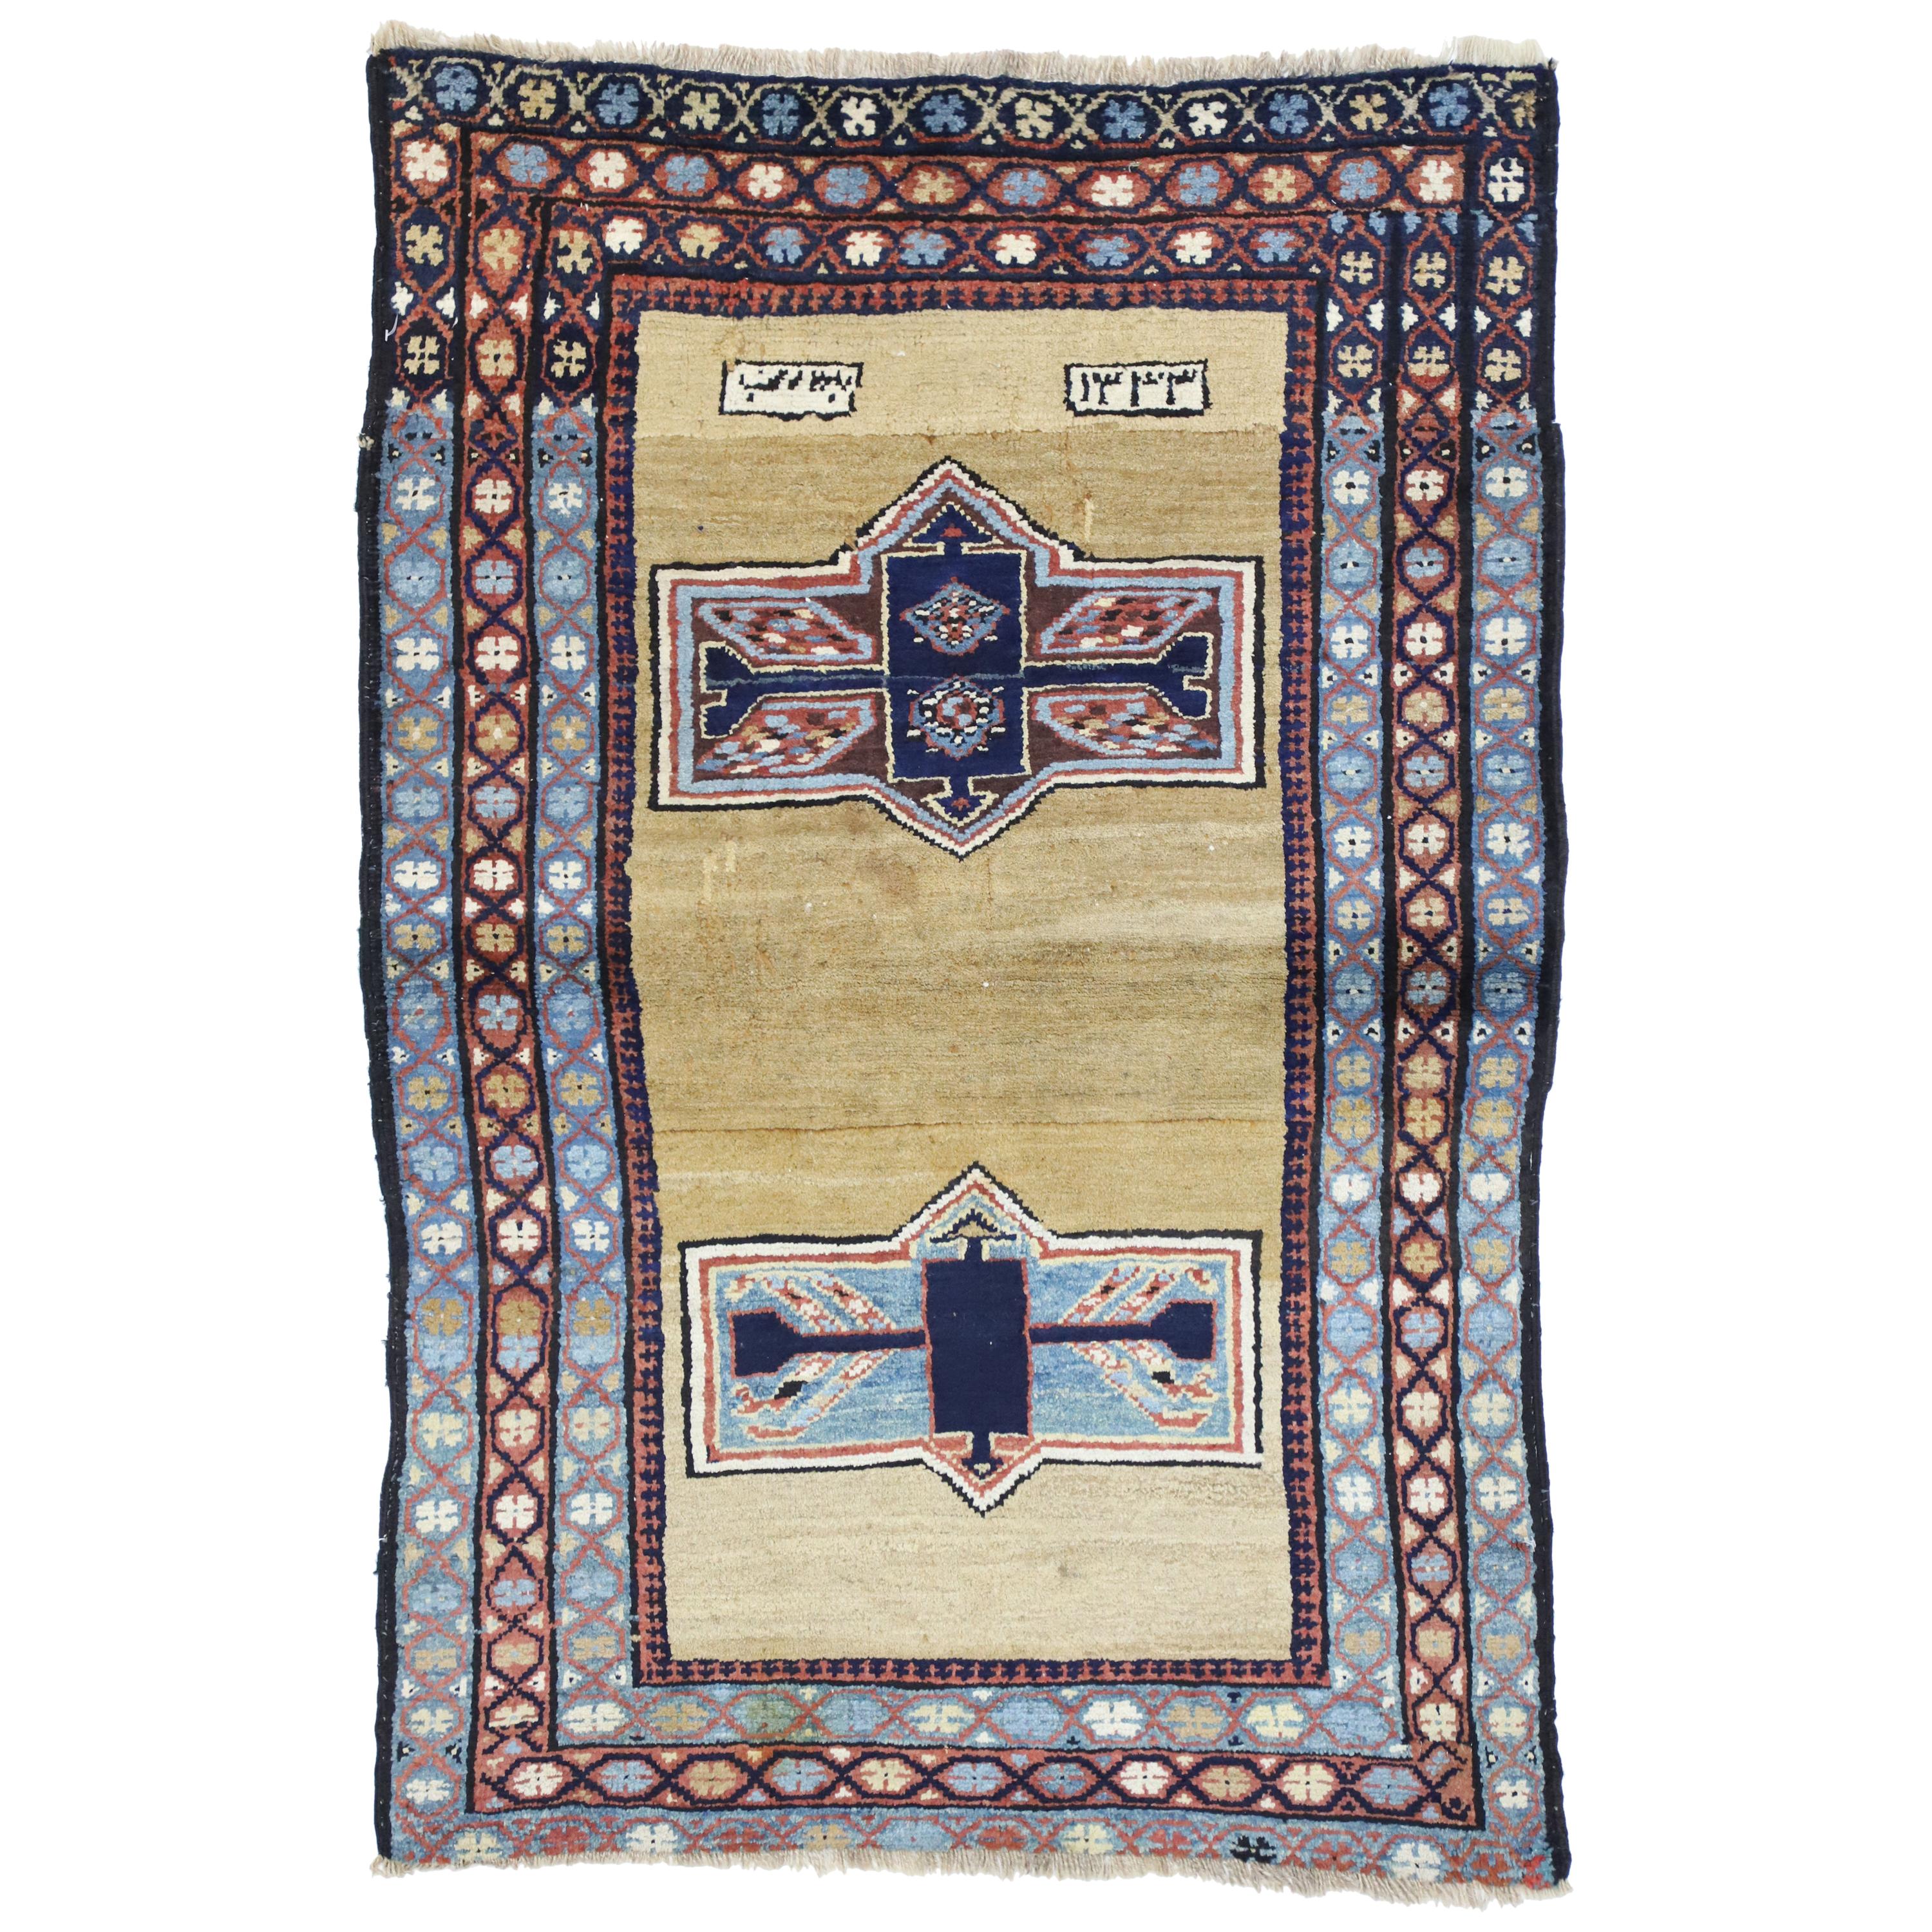 Tapis persan ancien d'Azerbaïdjan avec motif tribal, style moderne du milieu du siècle dernier